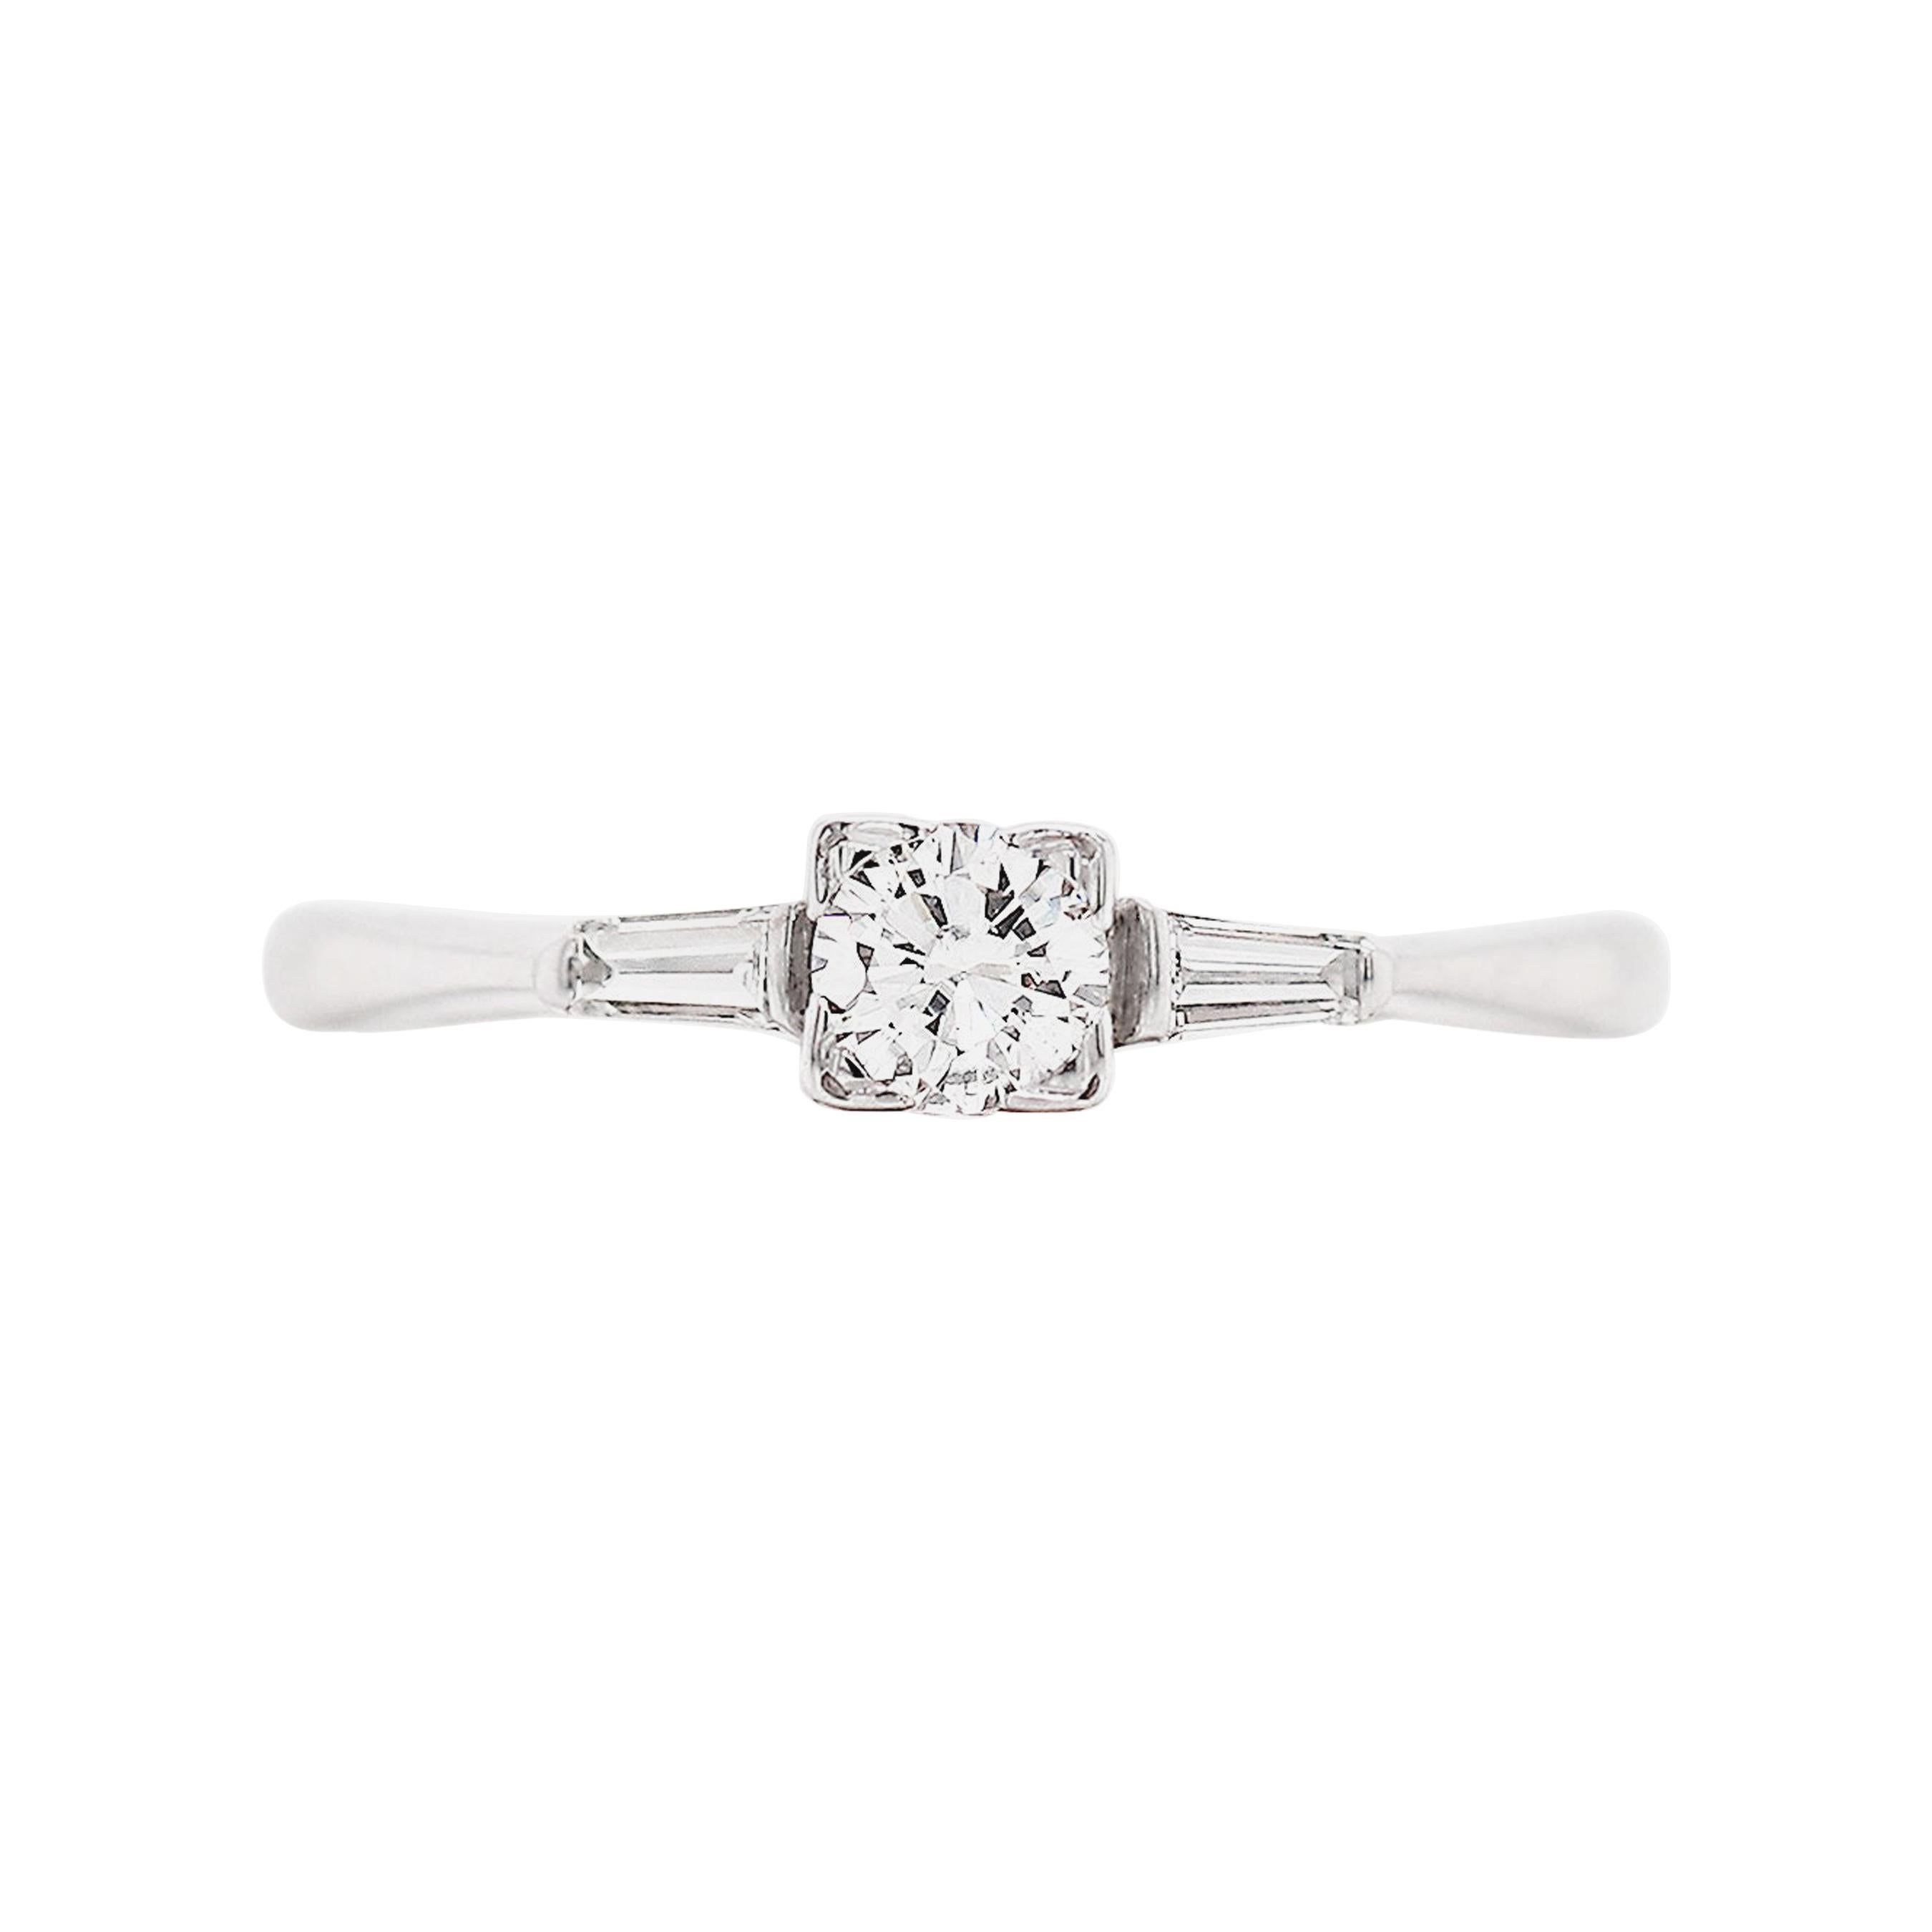 Art Deco Style 0.30 Carat Diamond 18 Carat White Gold Ring, circa 1970s